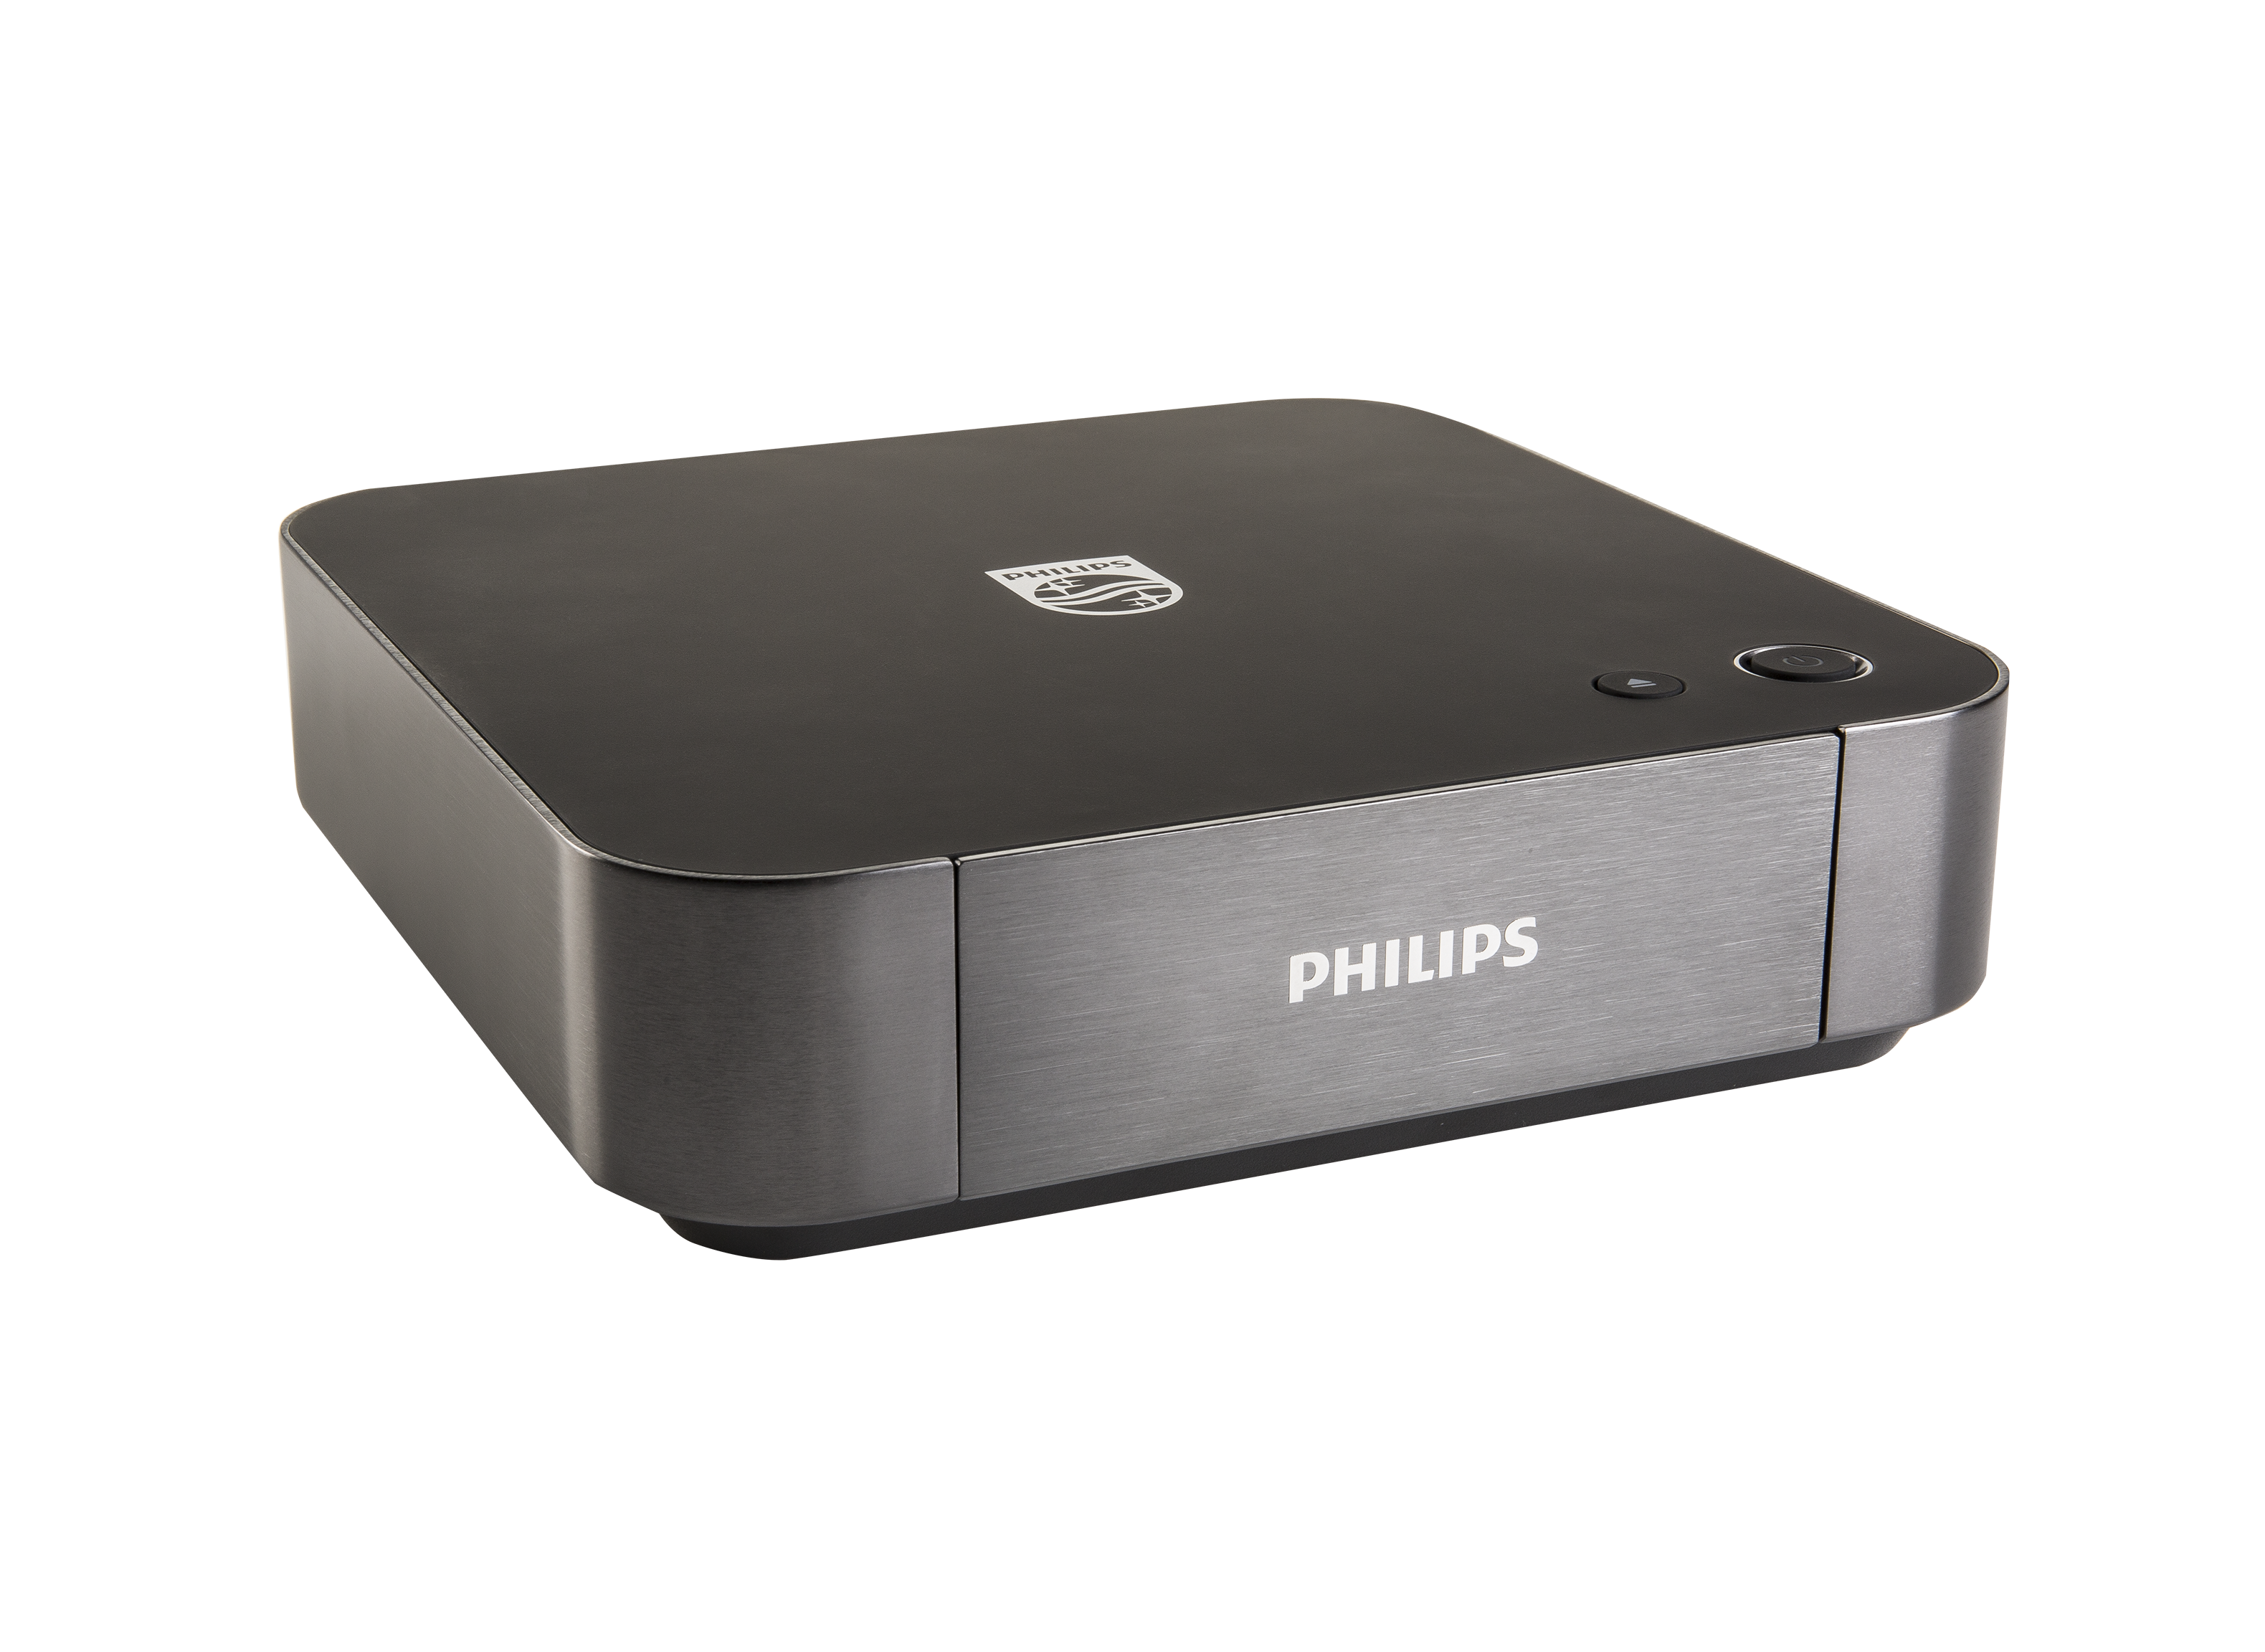 4K Ultra HD Blu-ray players - Cheap 4K Ultra HD Blu-ray player Deals